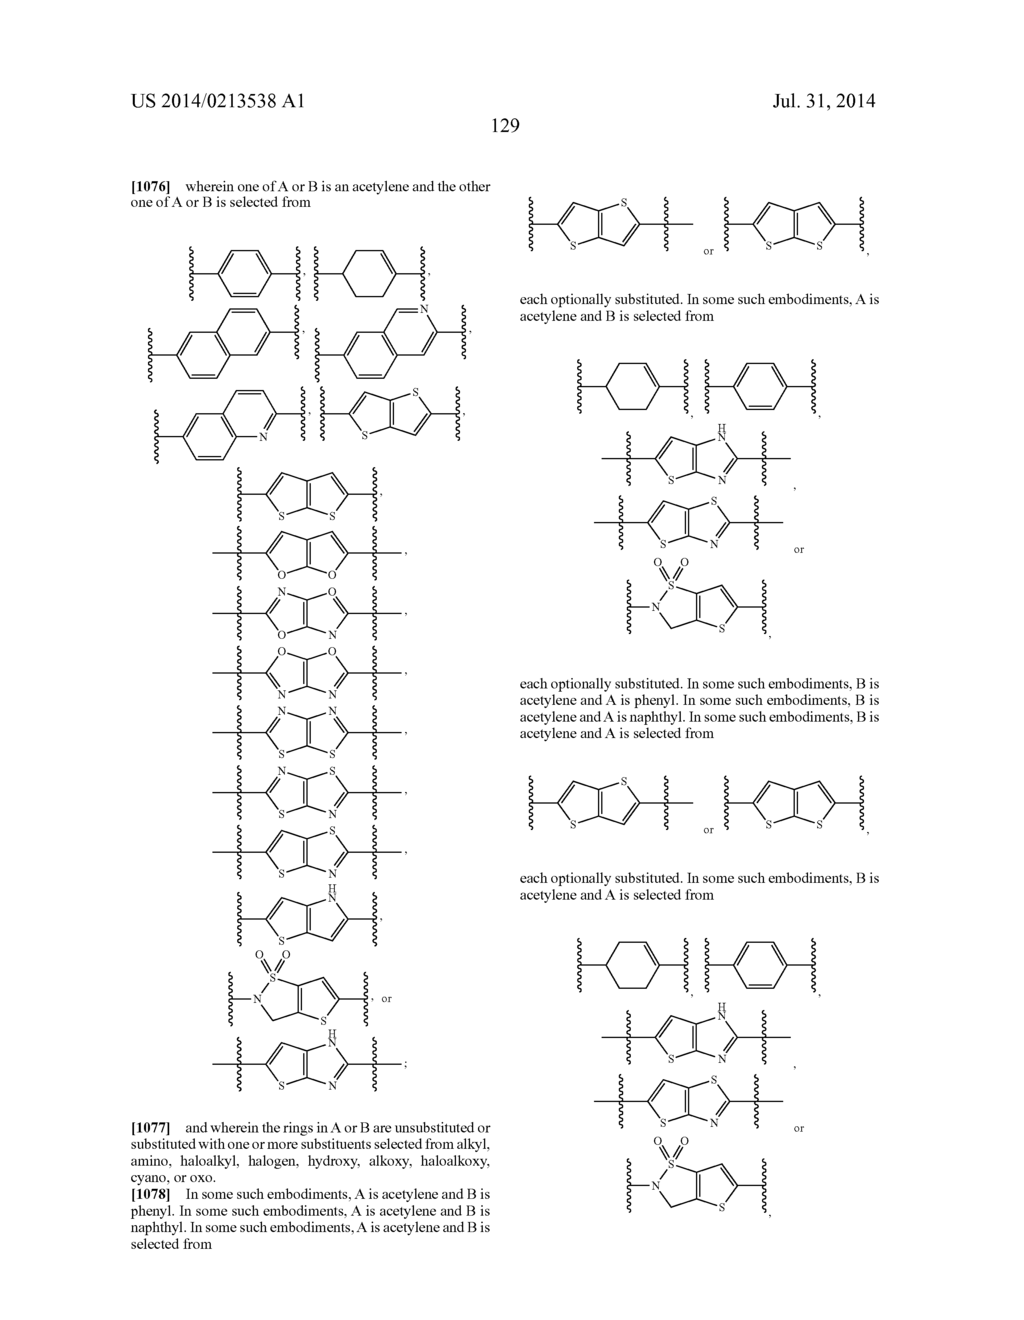 LYSOPHOSPHATIDIC ACID RECEPTOR ANTAGONISTS - diagram, schematic, and image 130